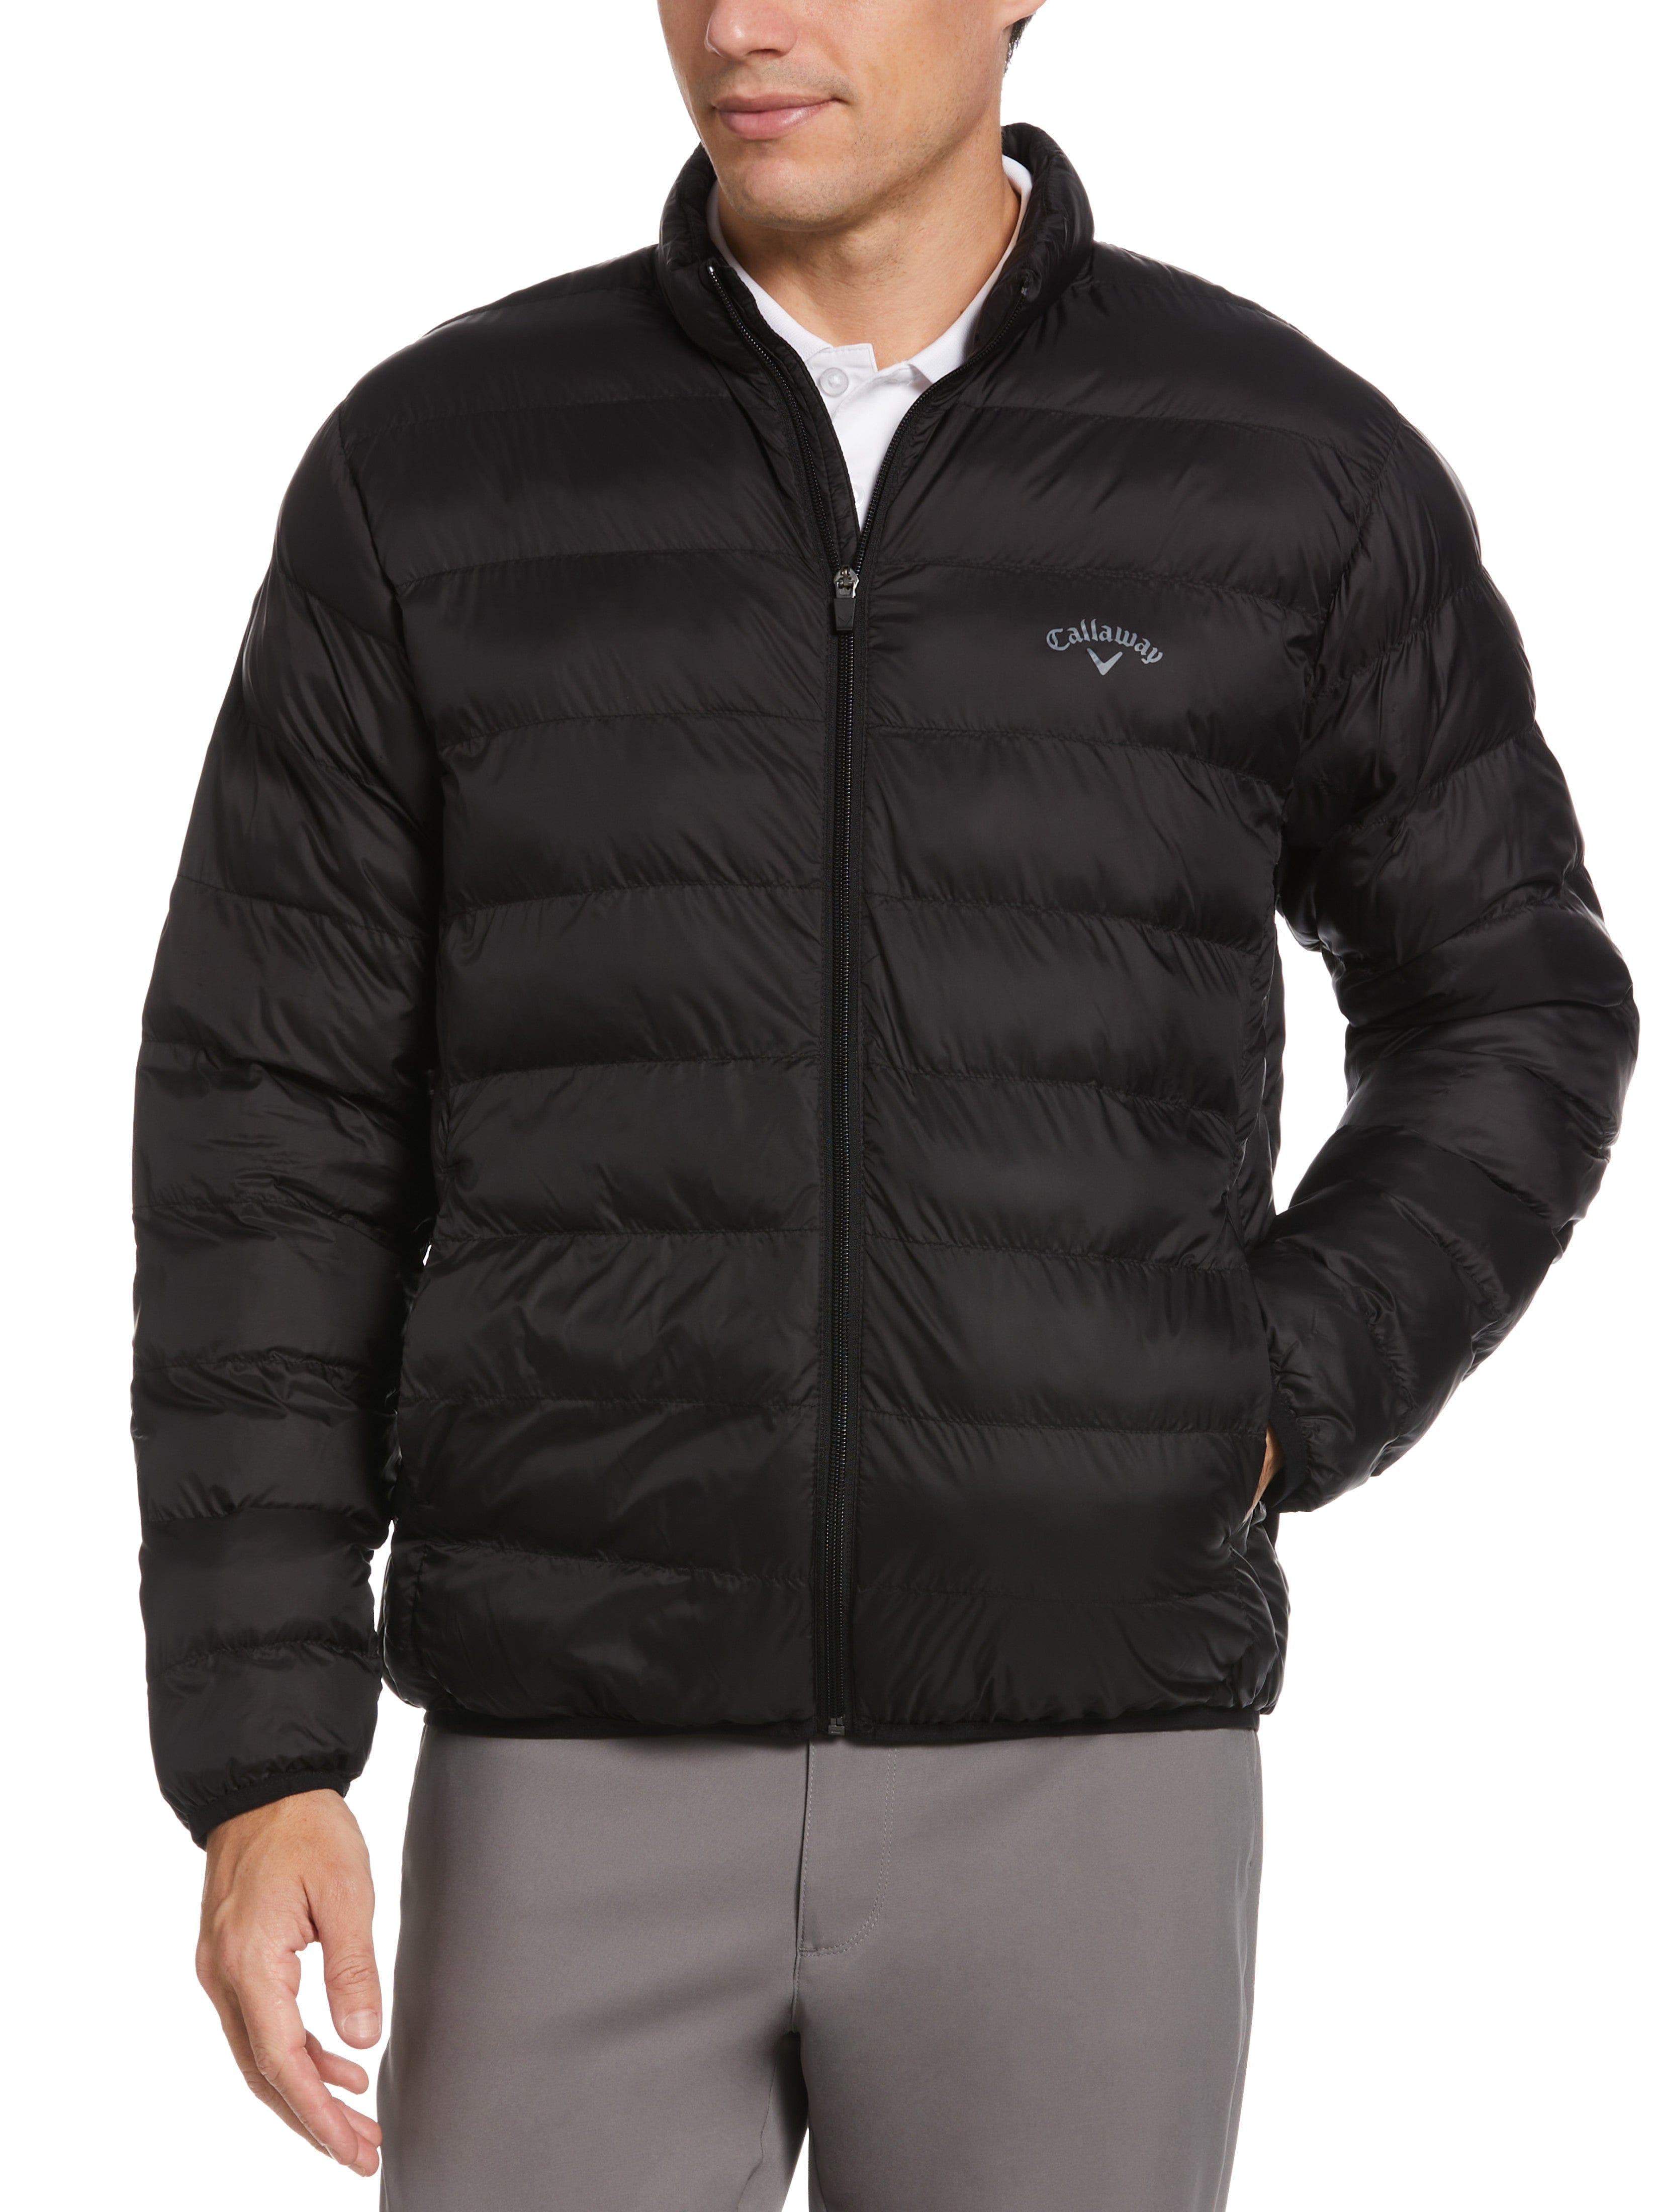 Callaway Apparel Mens Puffer Jacket Top, Size Large, Black, 100% Nylon | Golf Apparel Shop